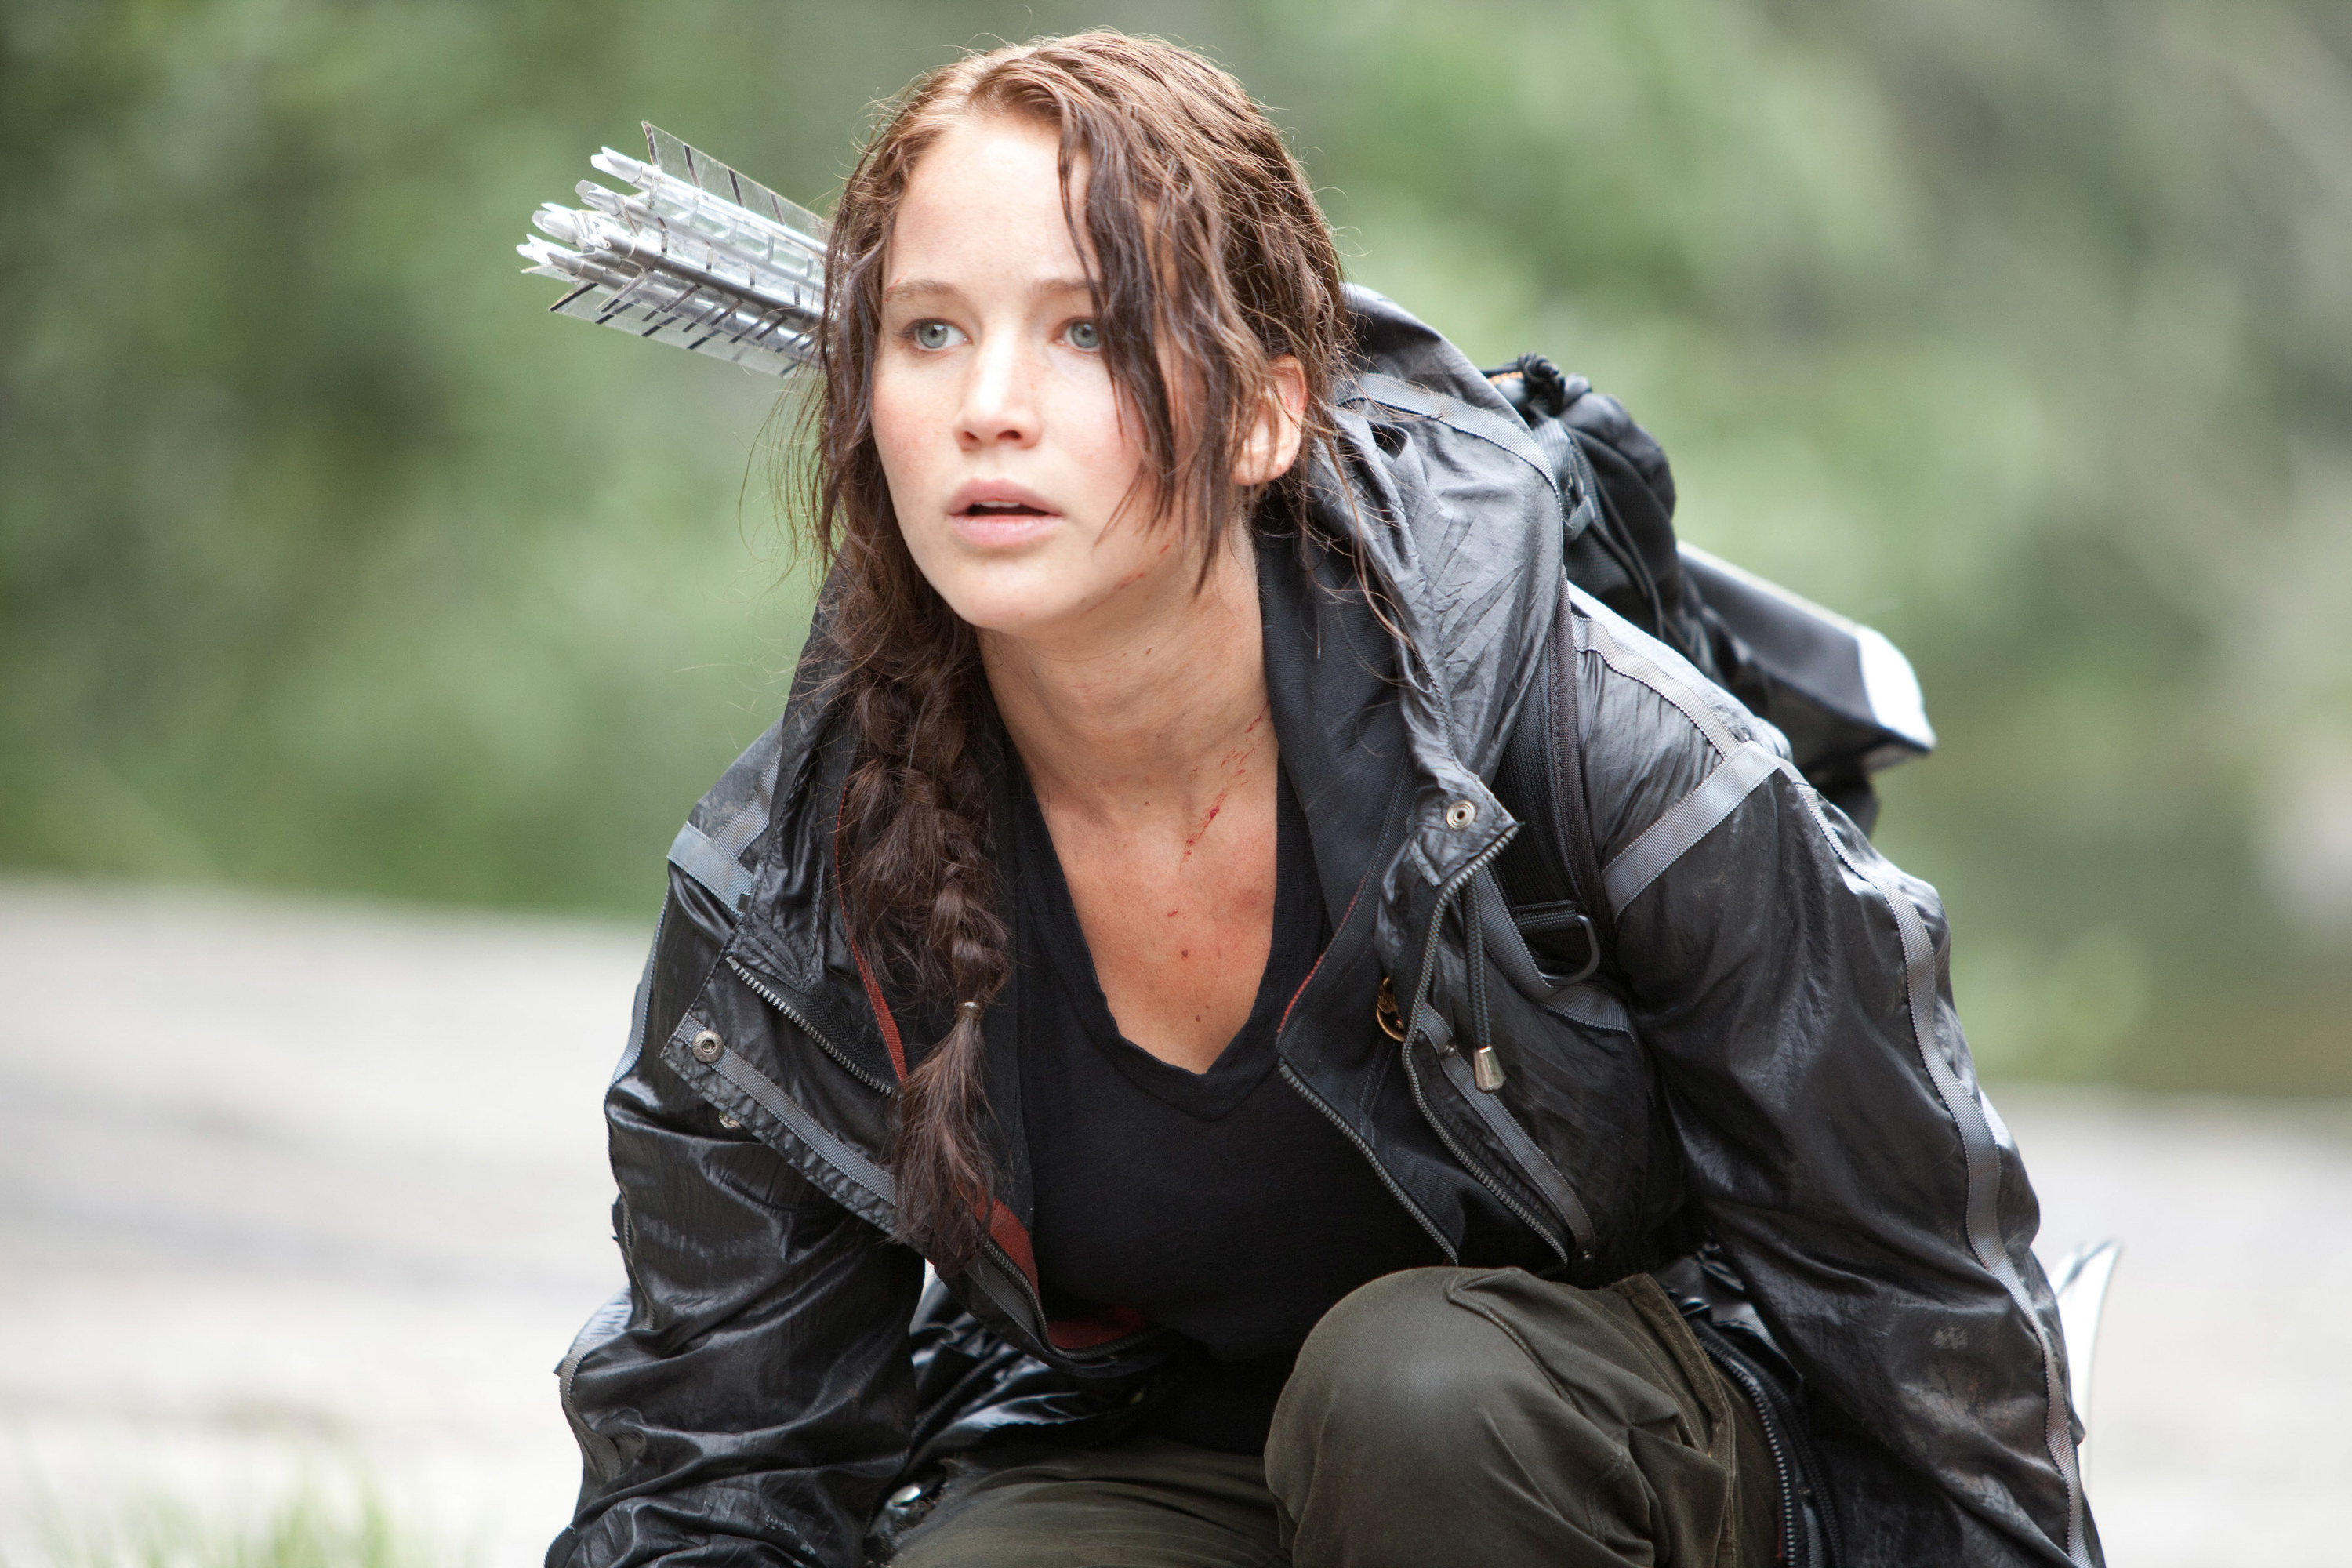 Lawrence as Katniss